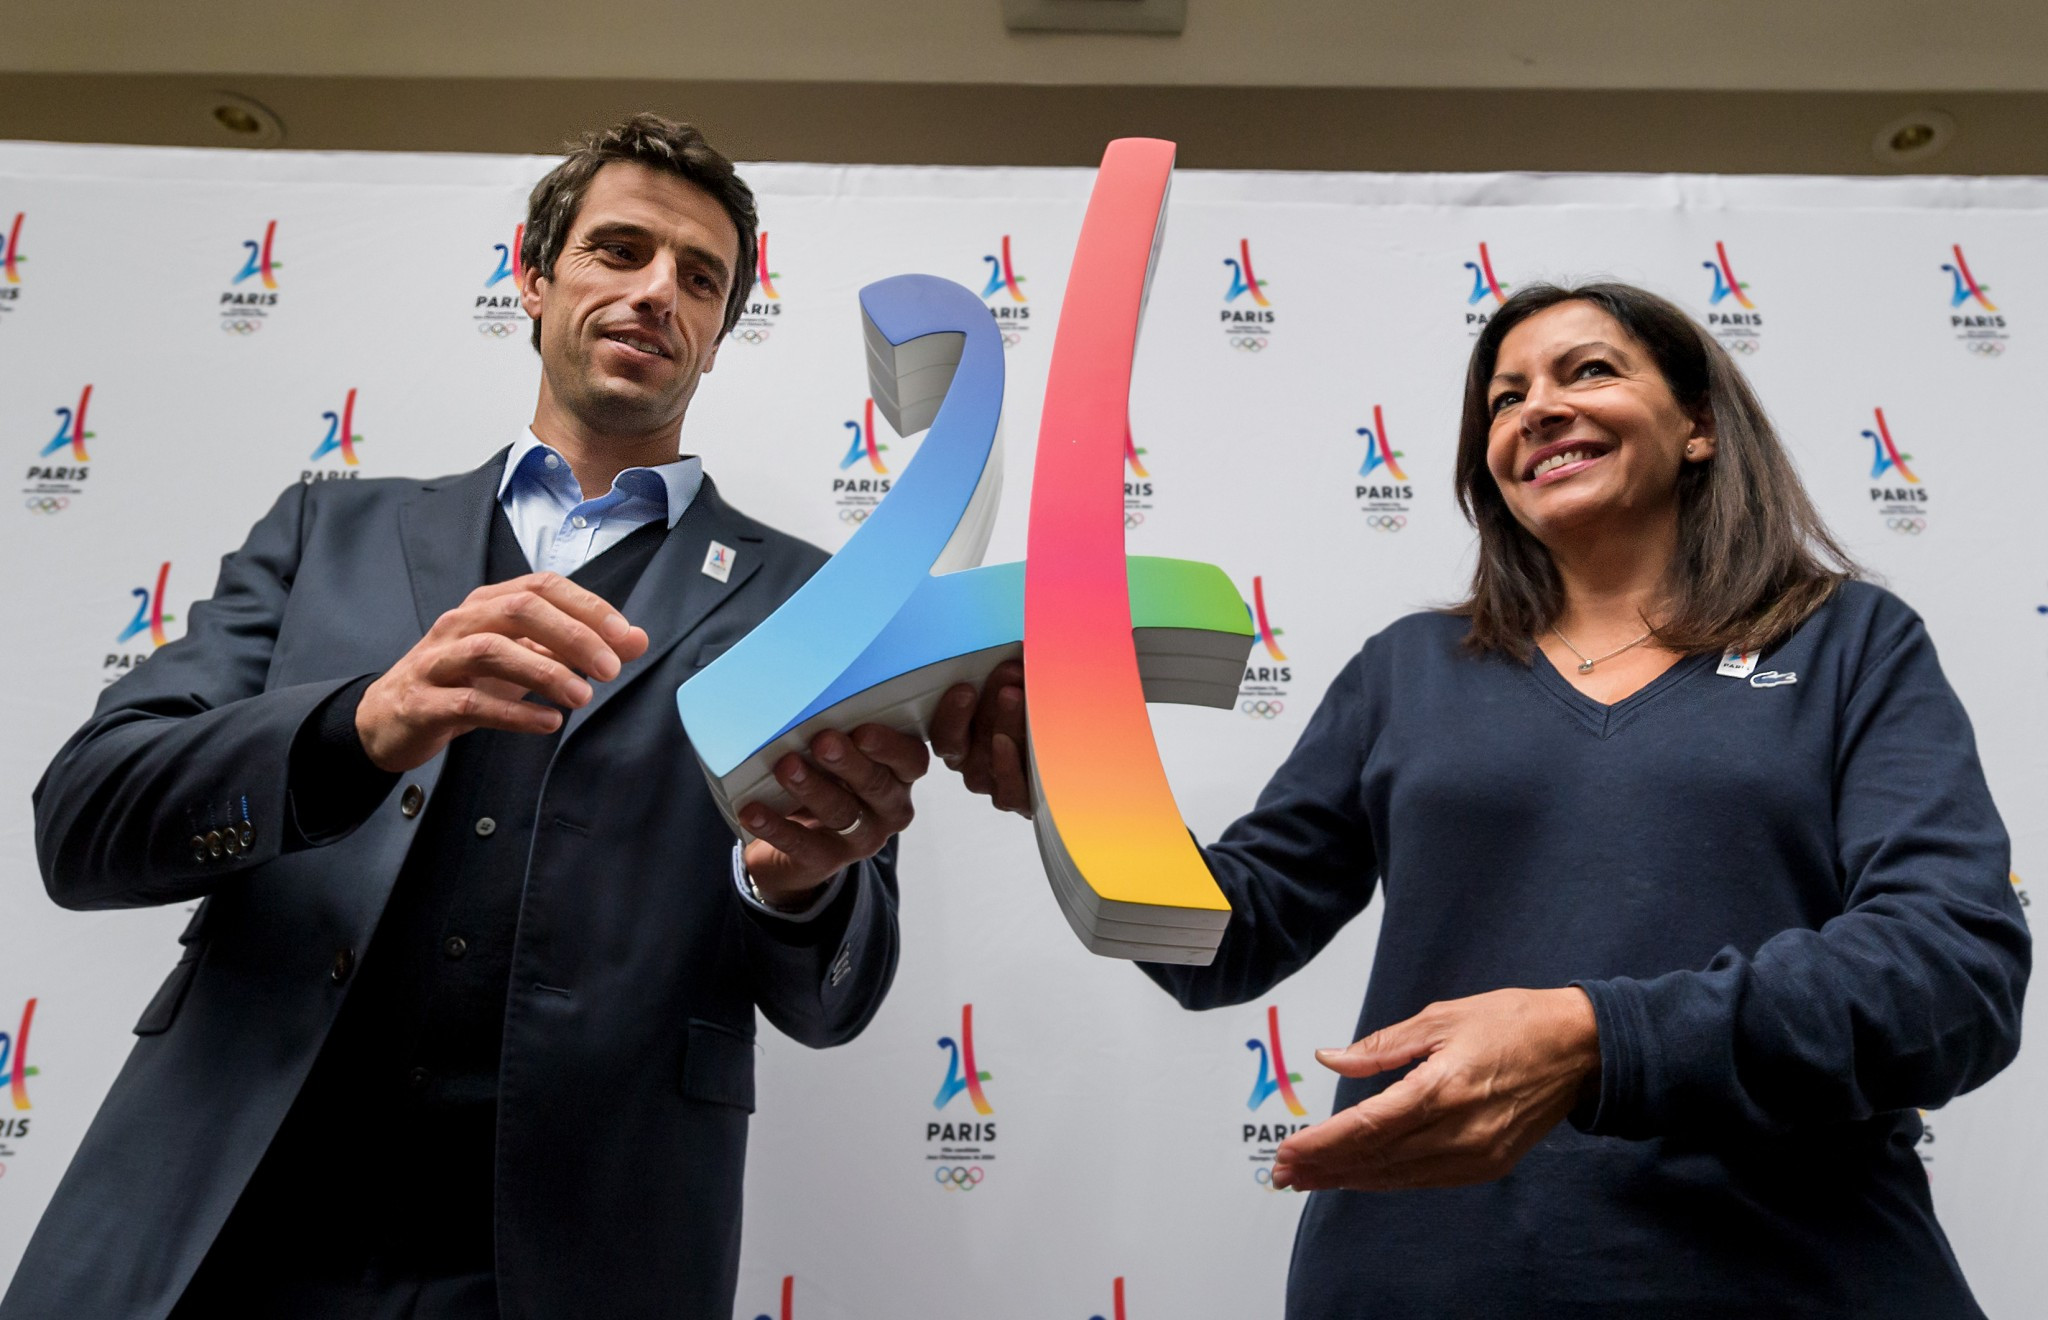 Paris 2024 promise a "transparent" Olympics following bidding controversies